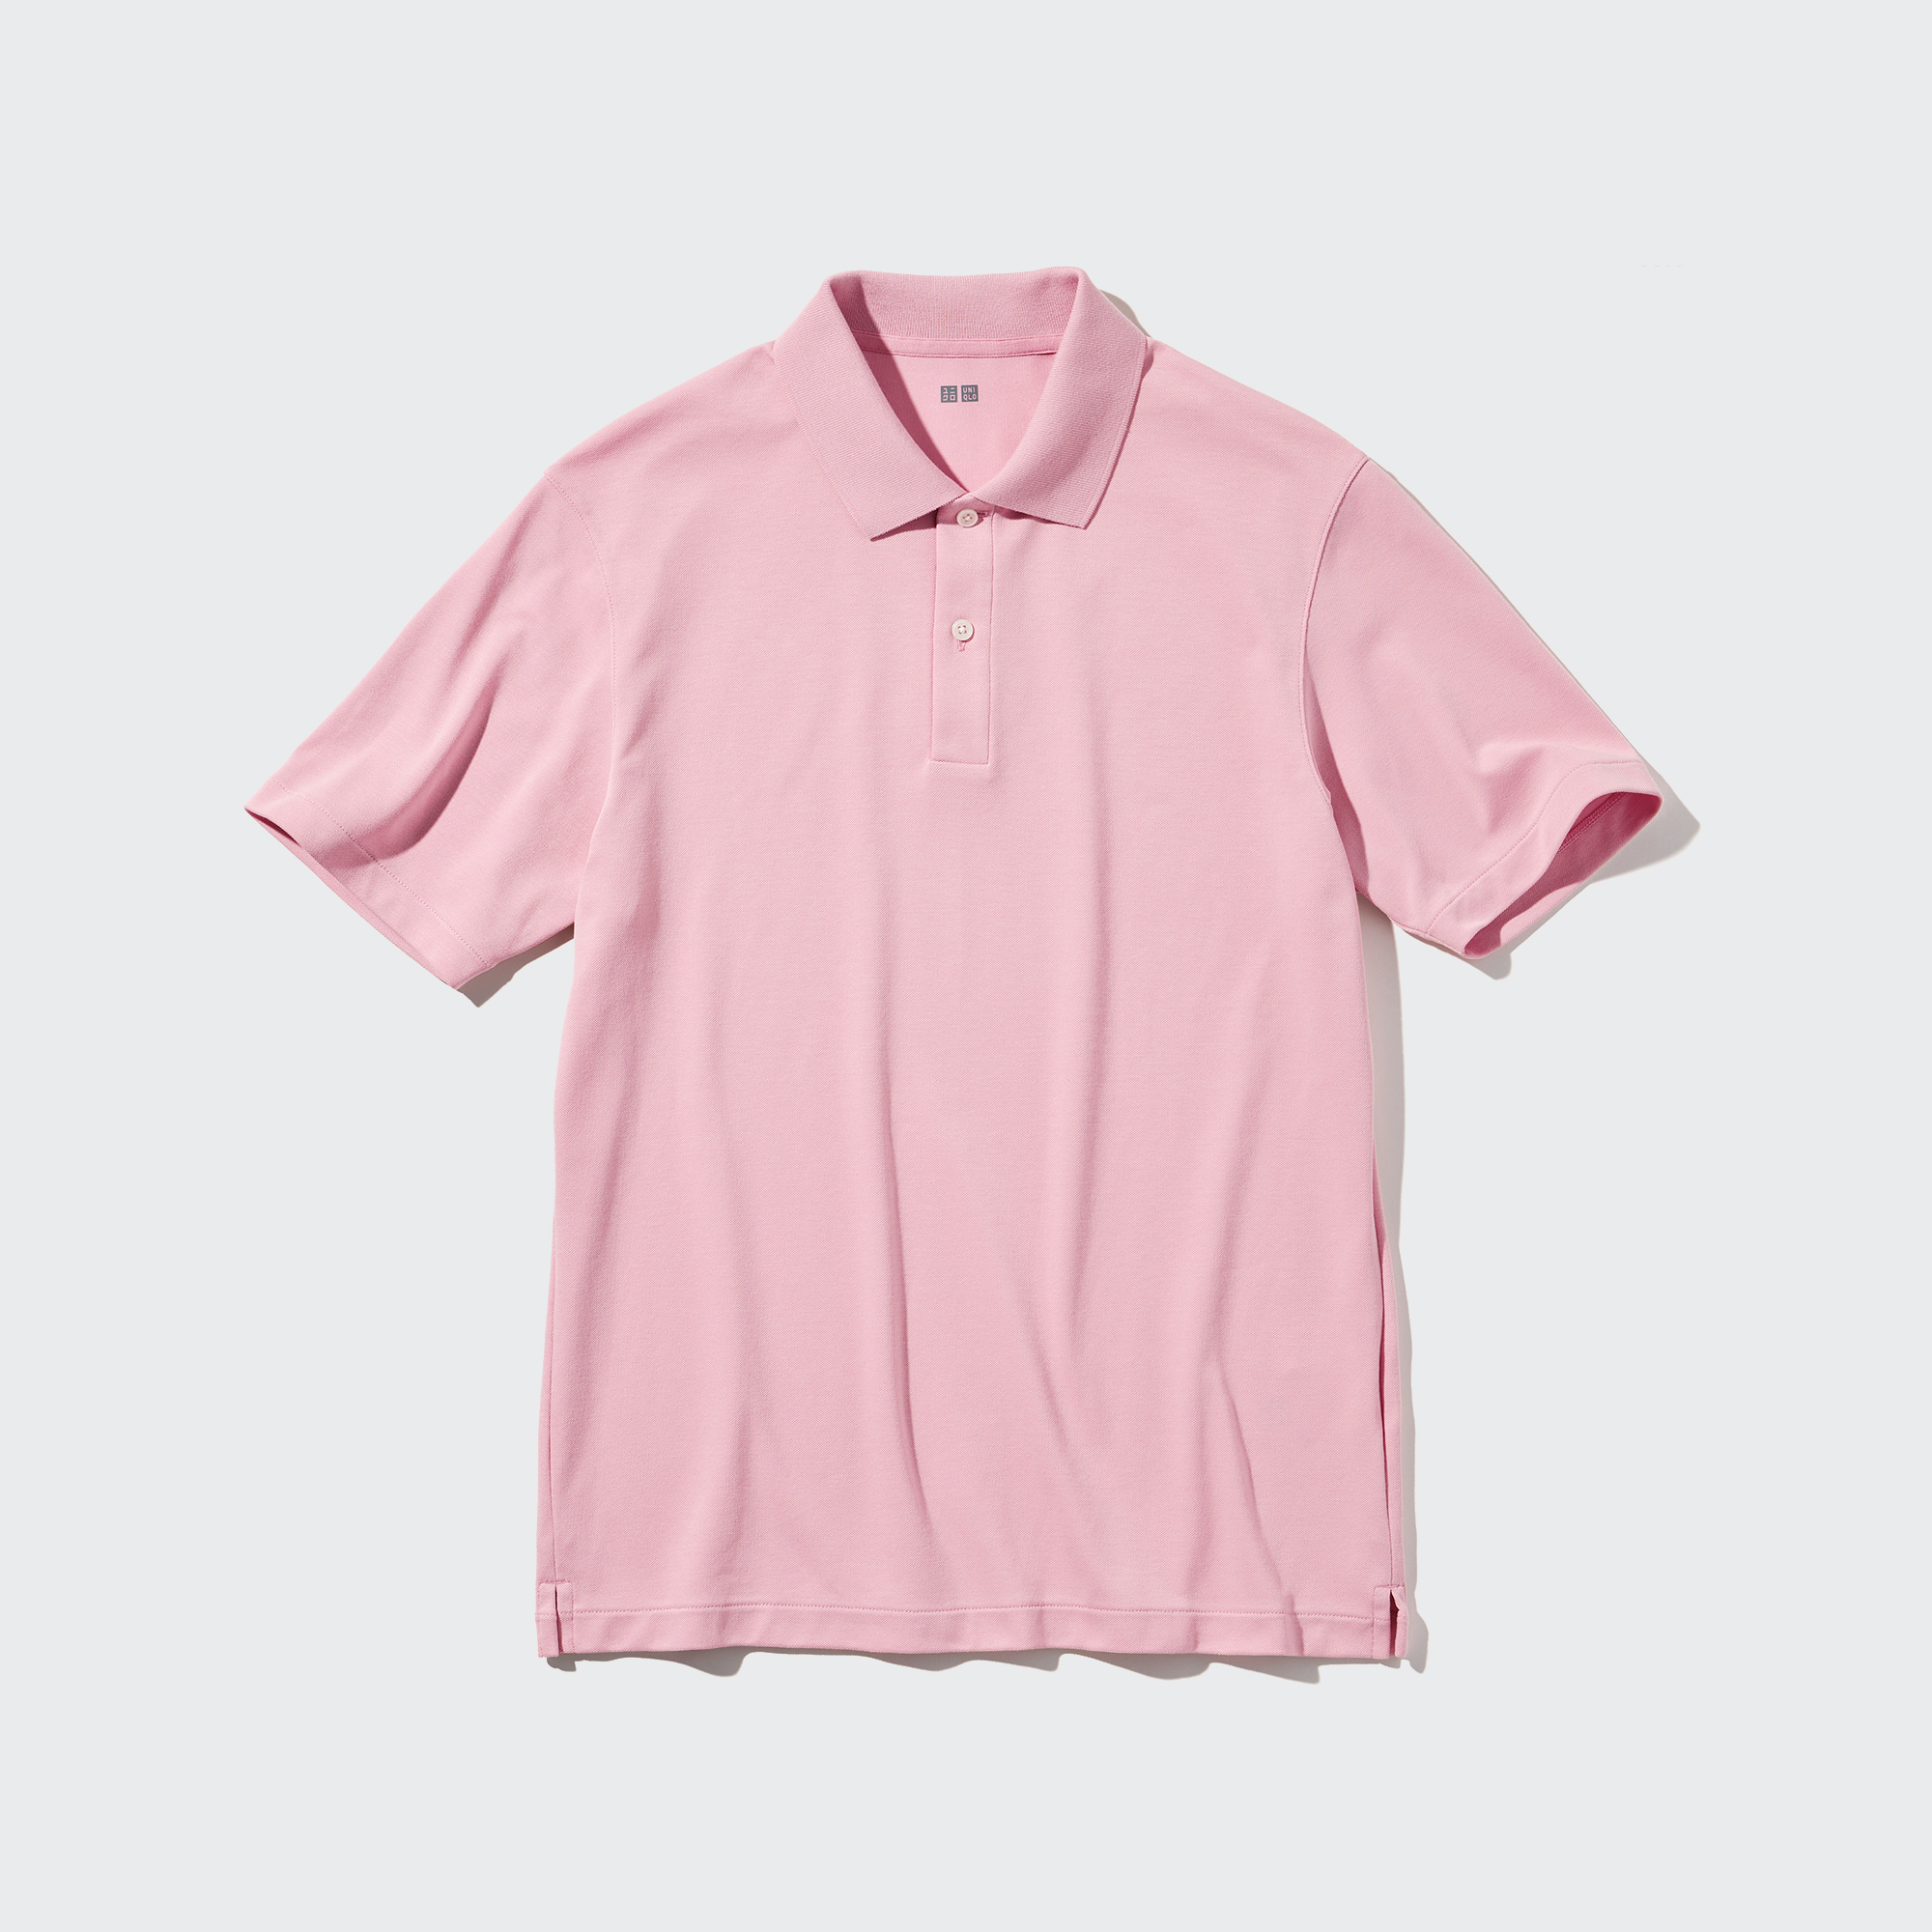 UNIQLO's AIRism Cotton Pique Polo Shirt